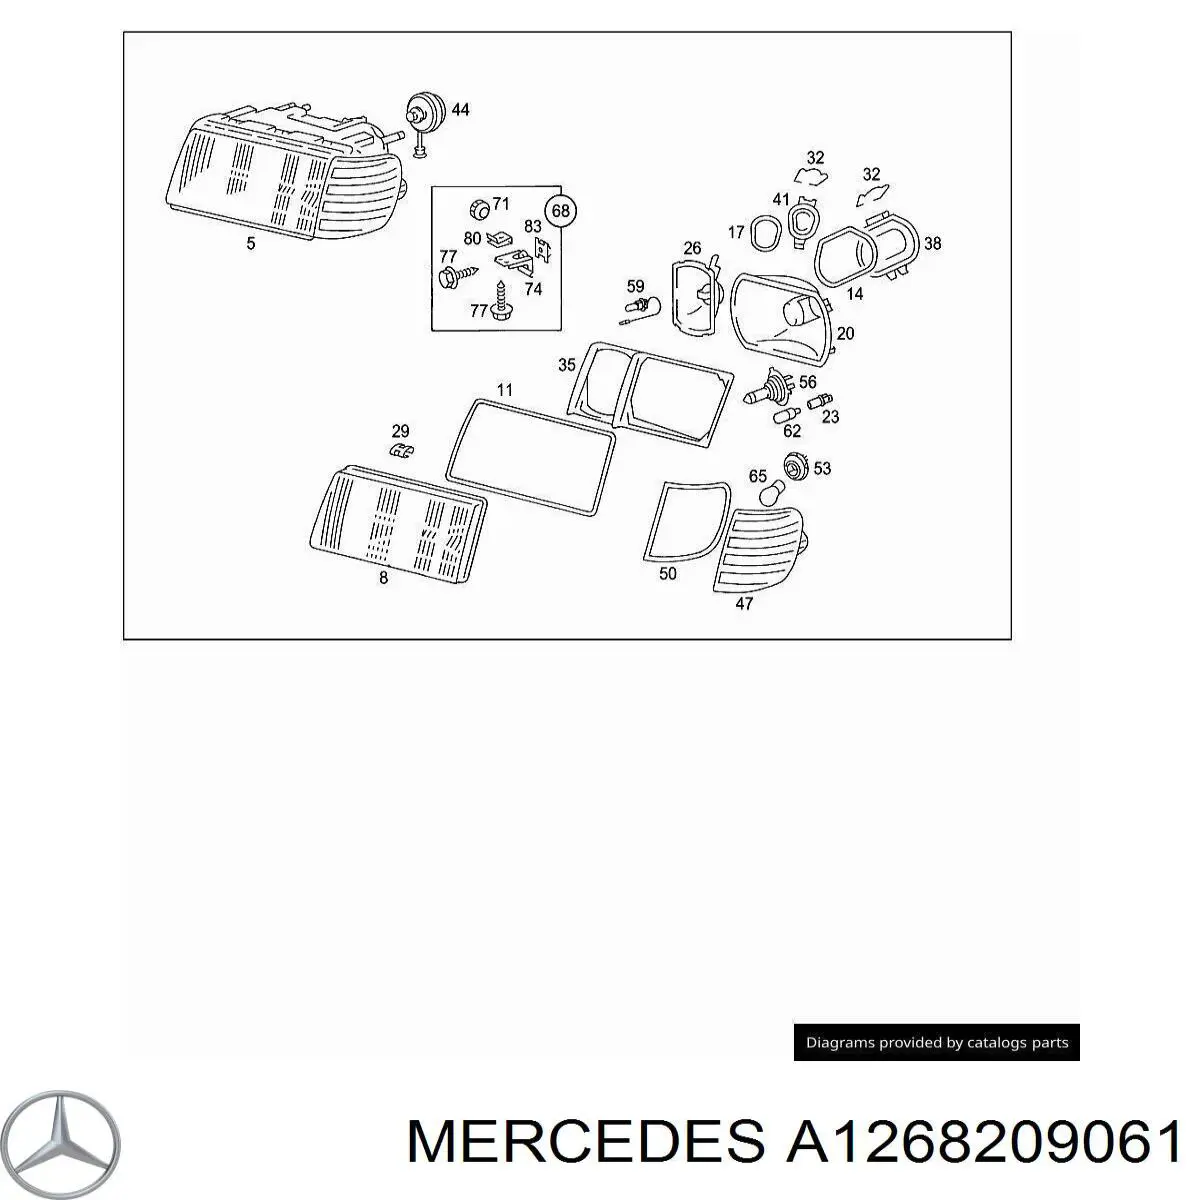 A1268209061 Mercedes faro derecho